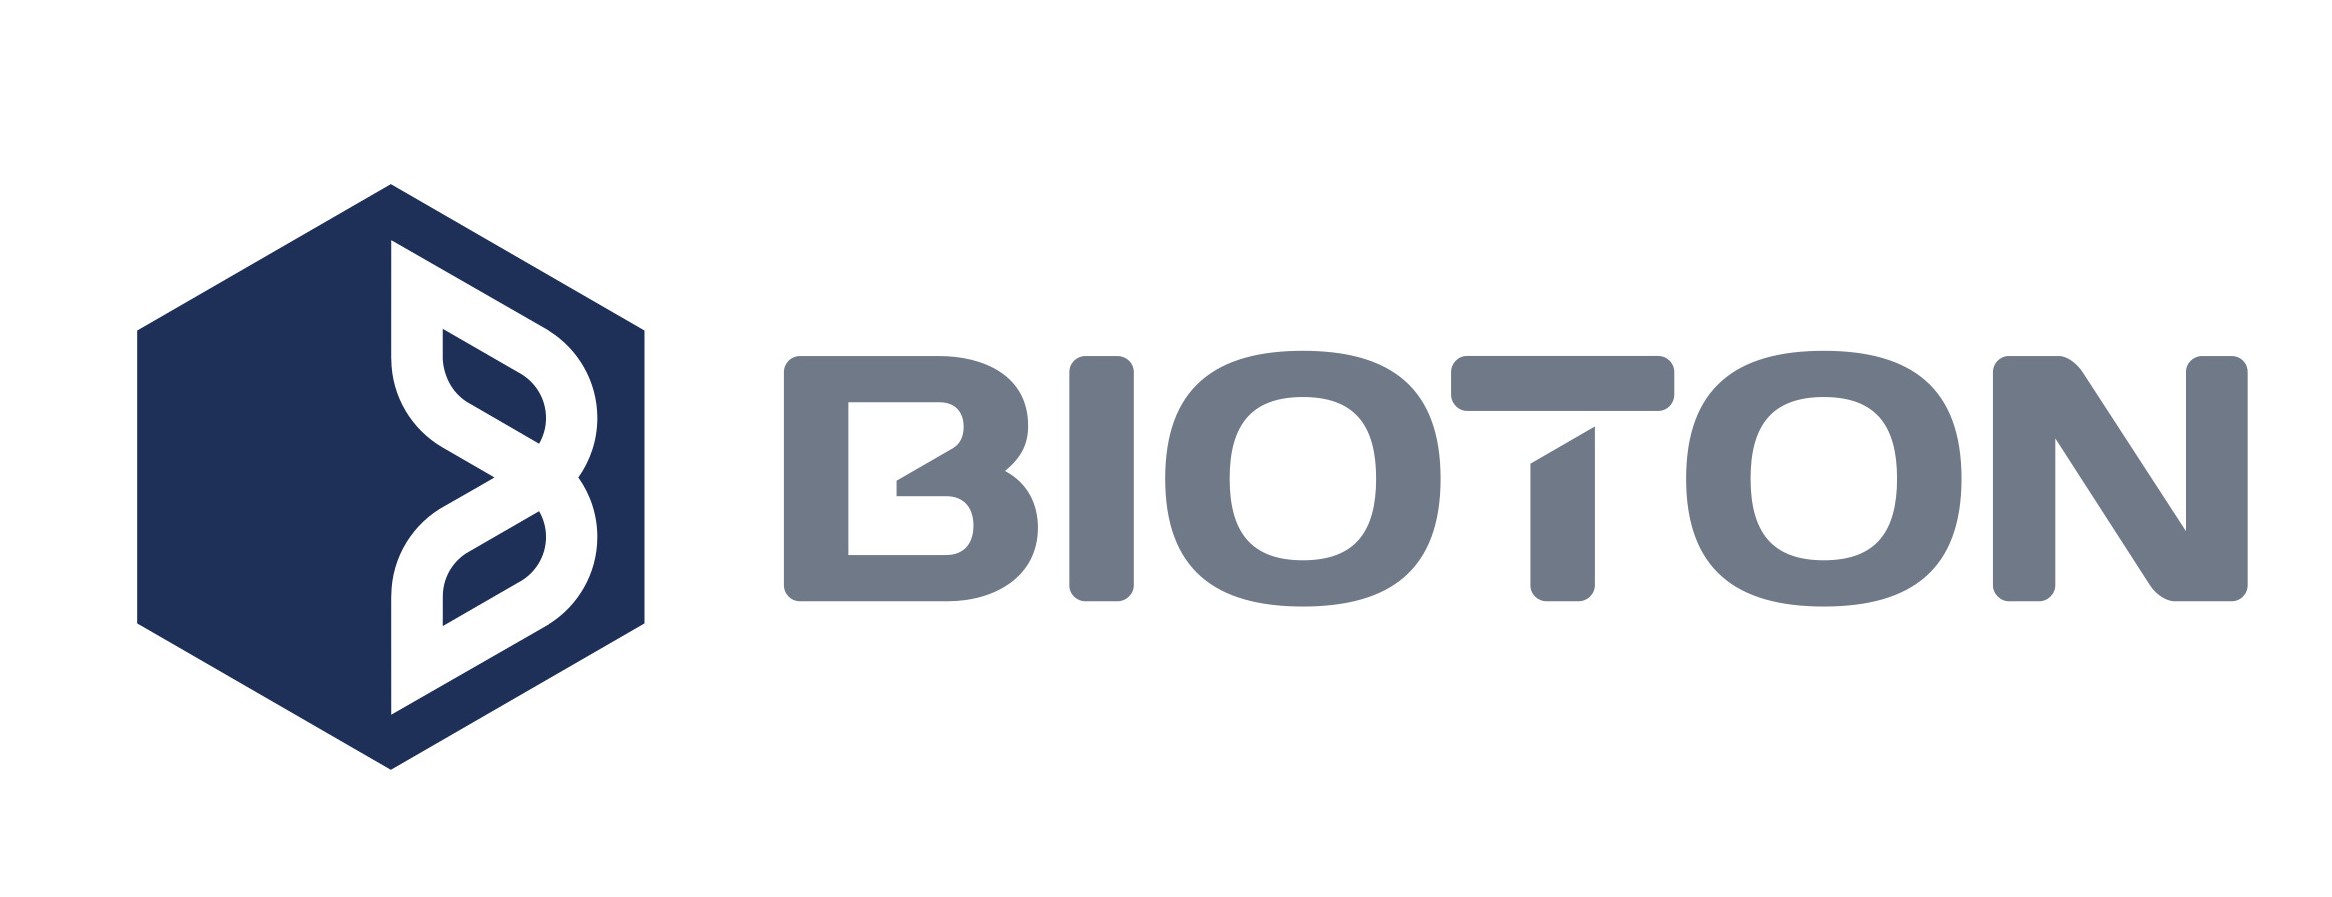 bioton-logo.jpg